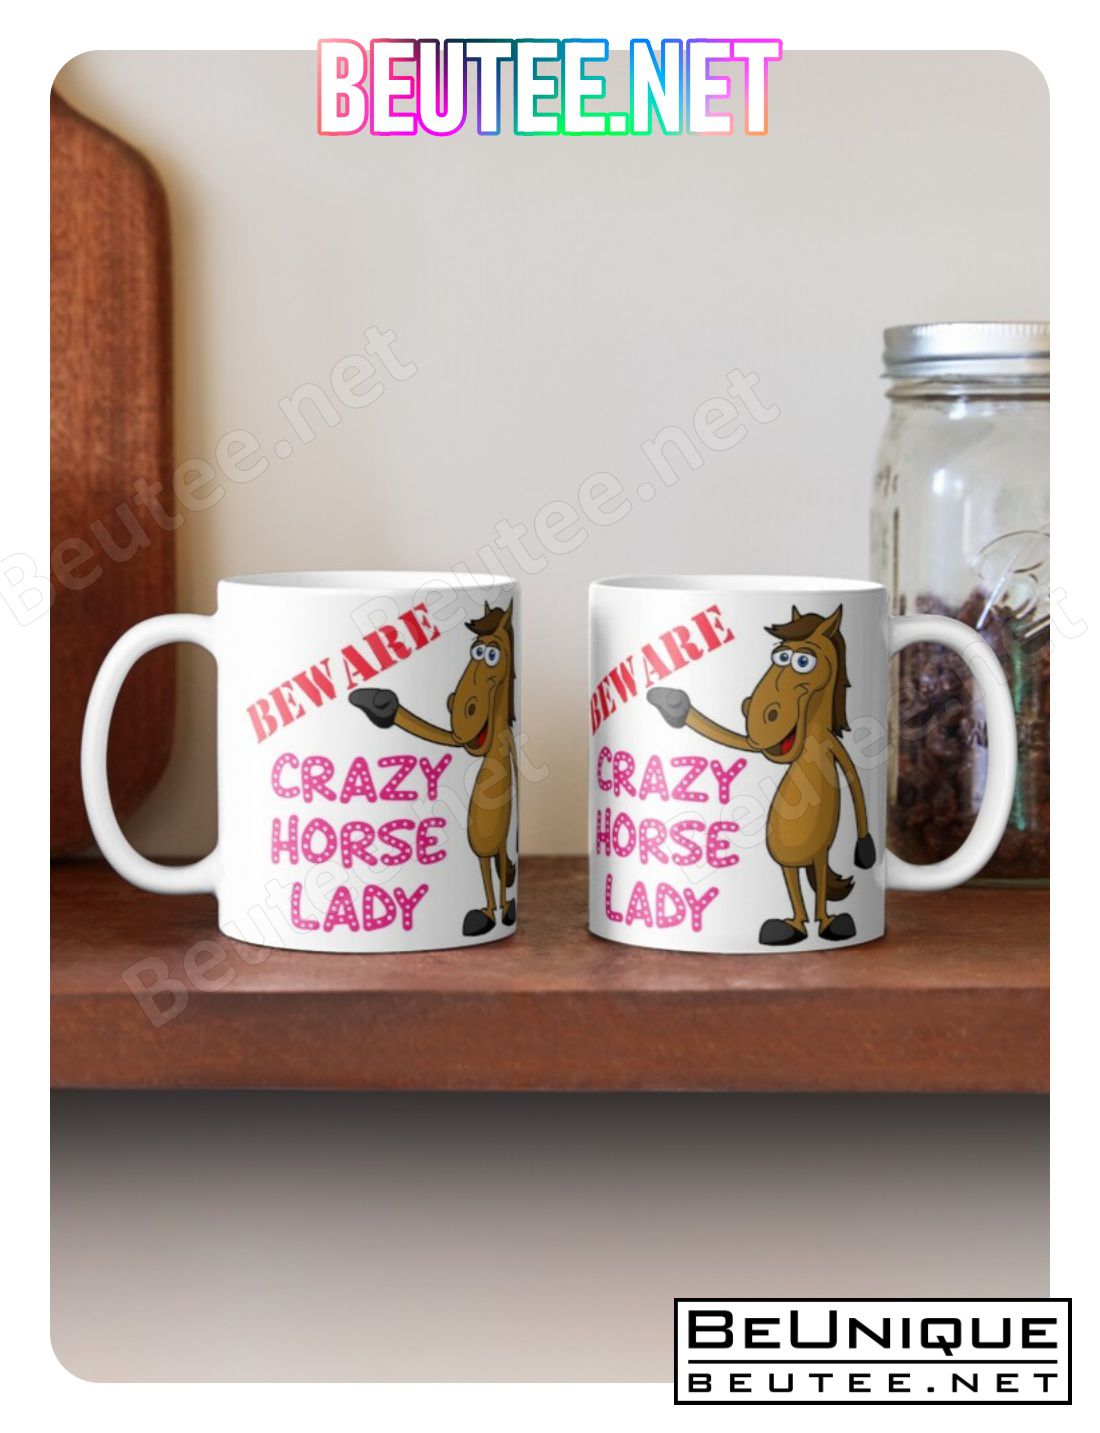 Beware Crazy Horse Lady Coffee Mug